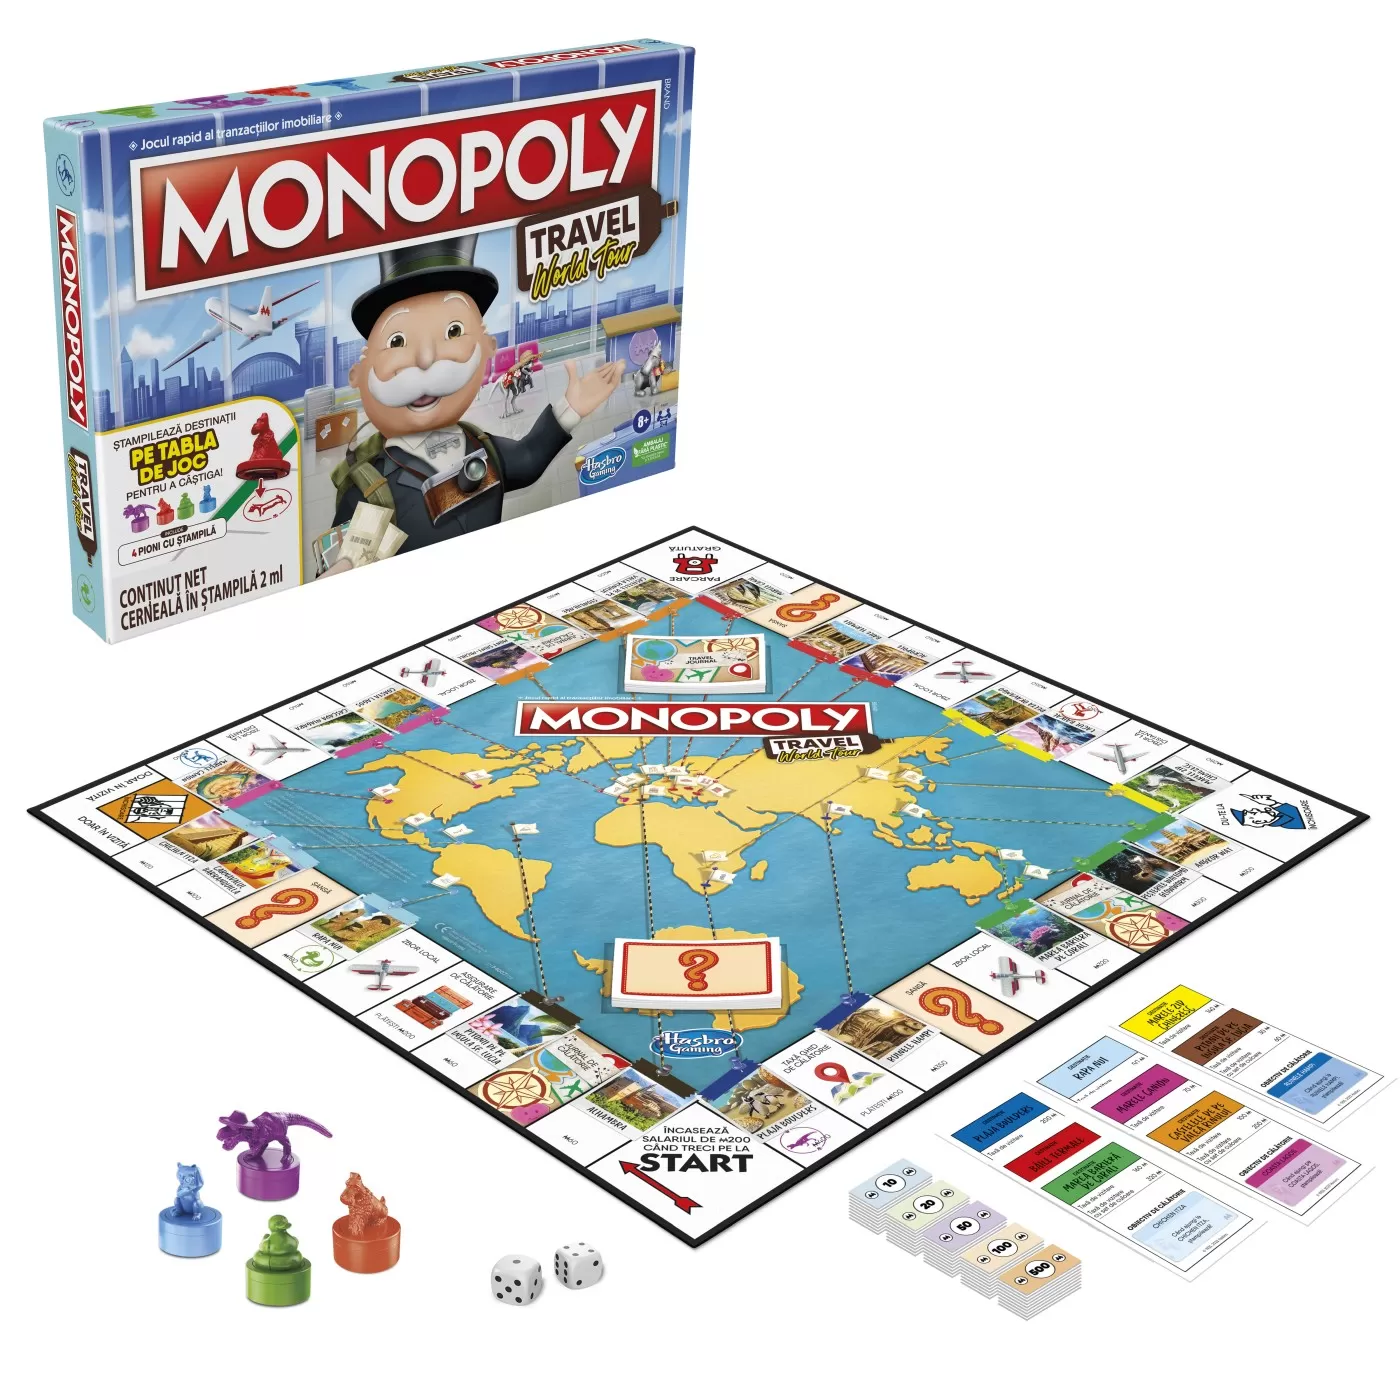 Joc - Monopoly Travel World Tour | Hasbro